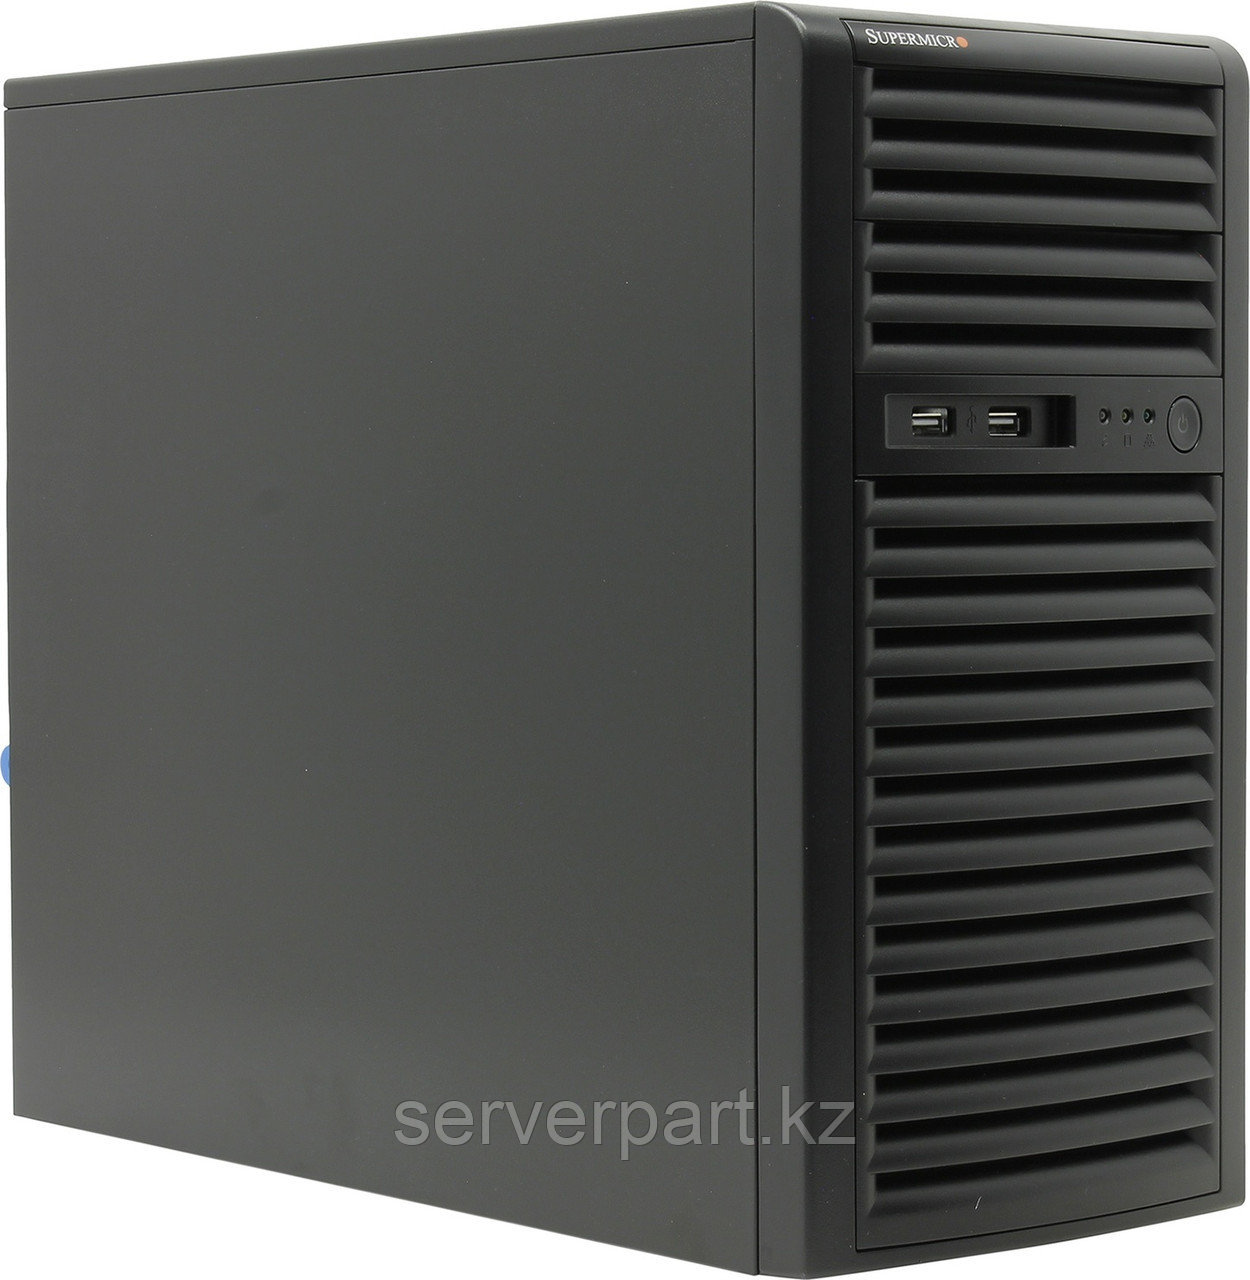 Сервер Supermicro SYS-5039C Tower 4LFF/4-core intel xeon E2124 3.3GHz/32GB UDIMM nECC/1x240GB SSD MU Hyb